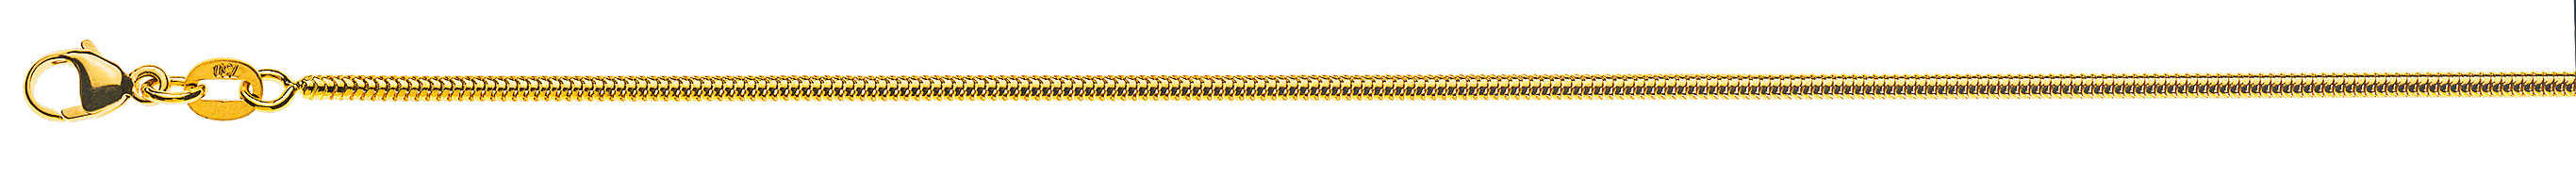 AURONOS Prestige Necklace yellow gold 18K snake chain 50cm 1.6mm